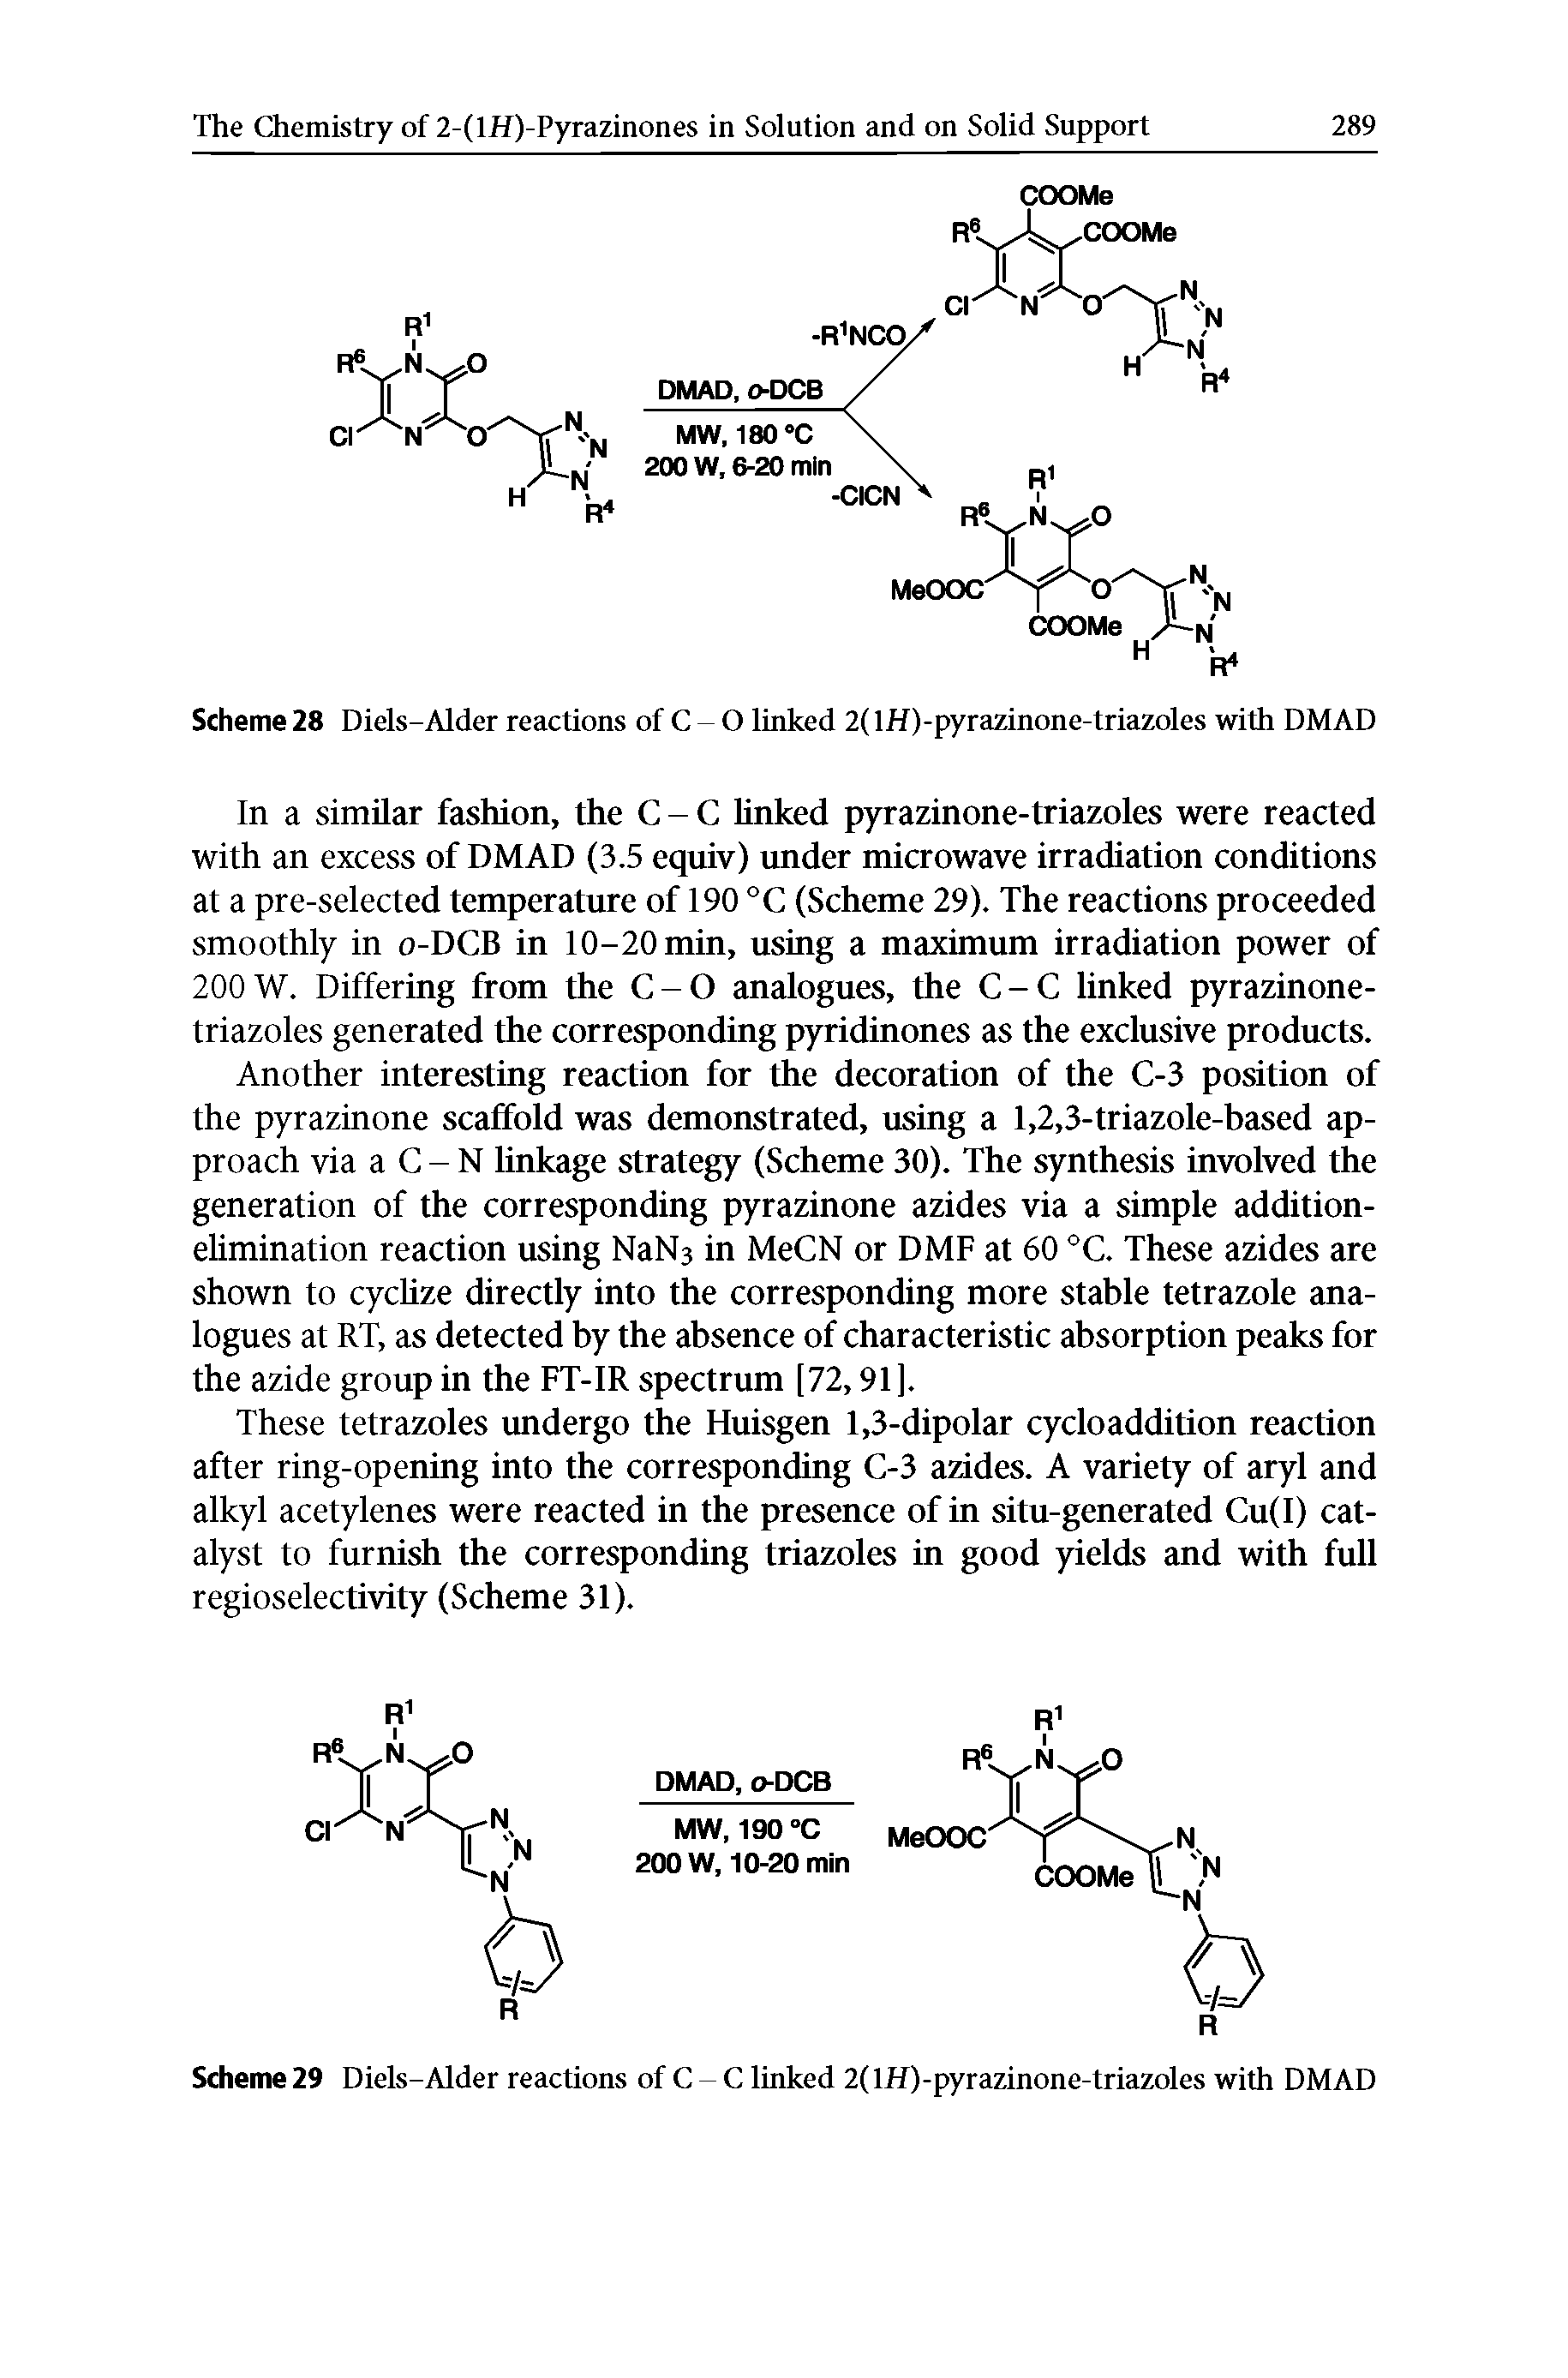 Scheme 28 Diels-Alder reactions of C - O linked 2( l//)-pyrazinone-triazoles with DMAD...